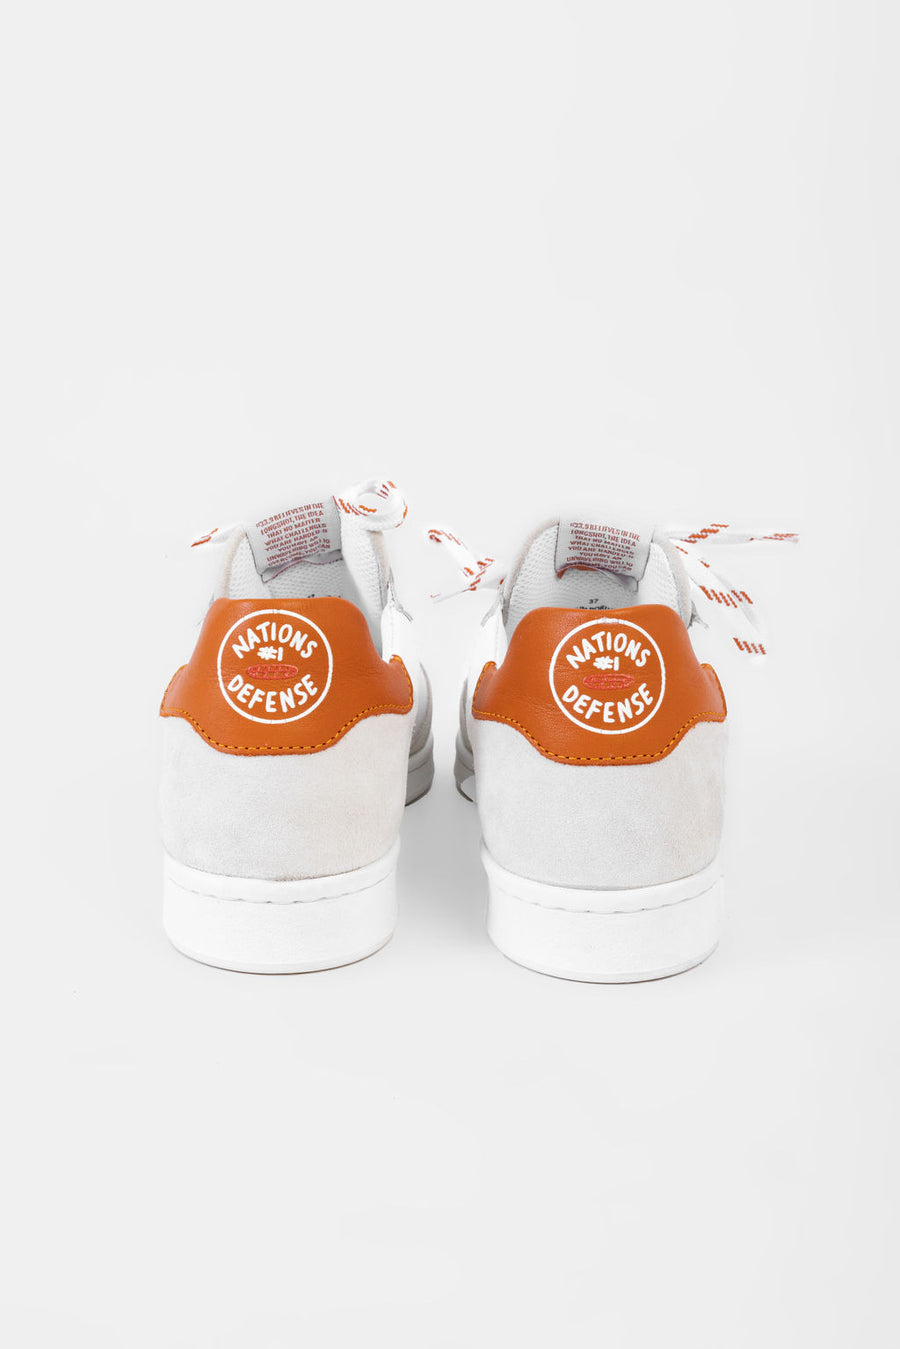 The Original Men's Sneaker Burnt Orange Edition